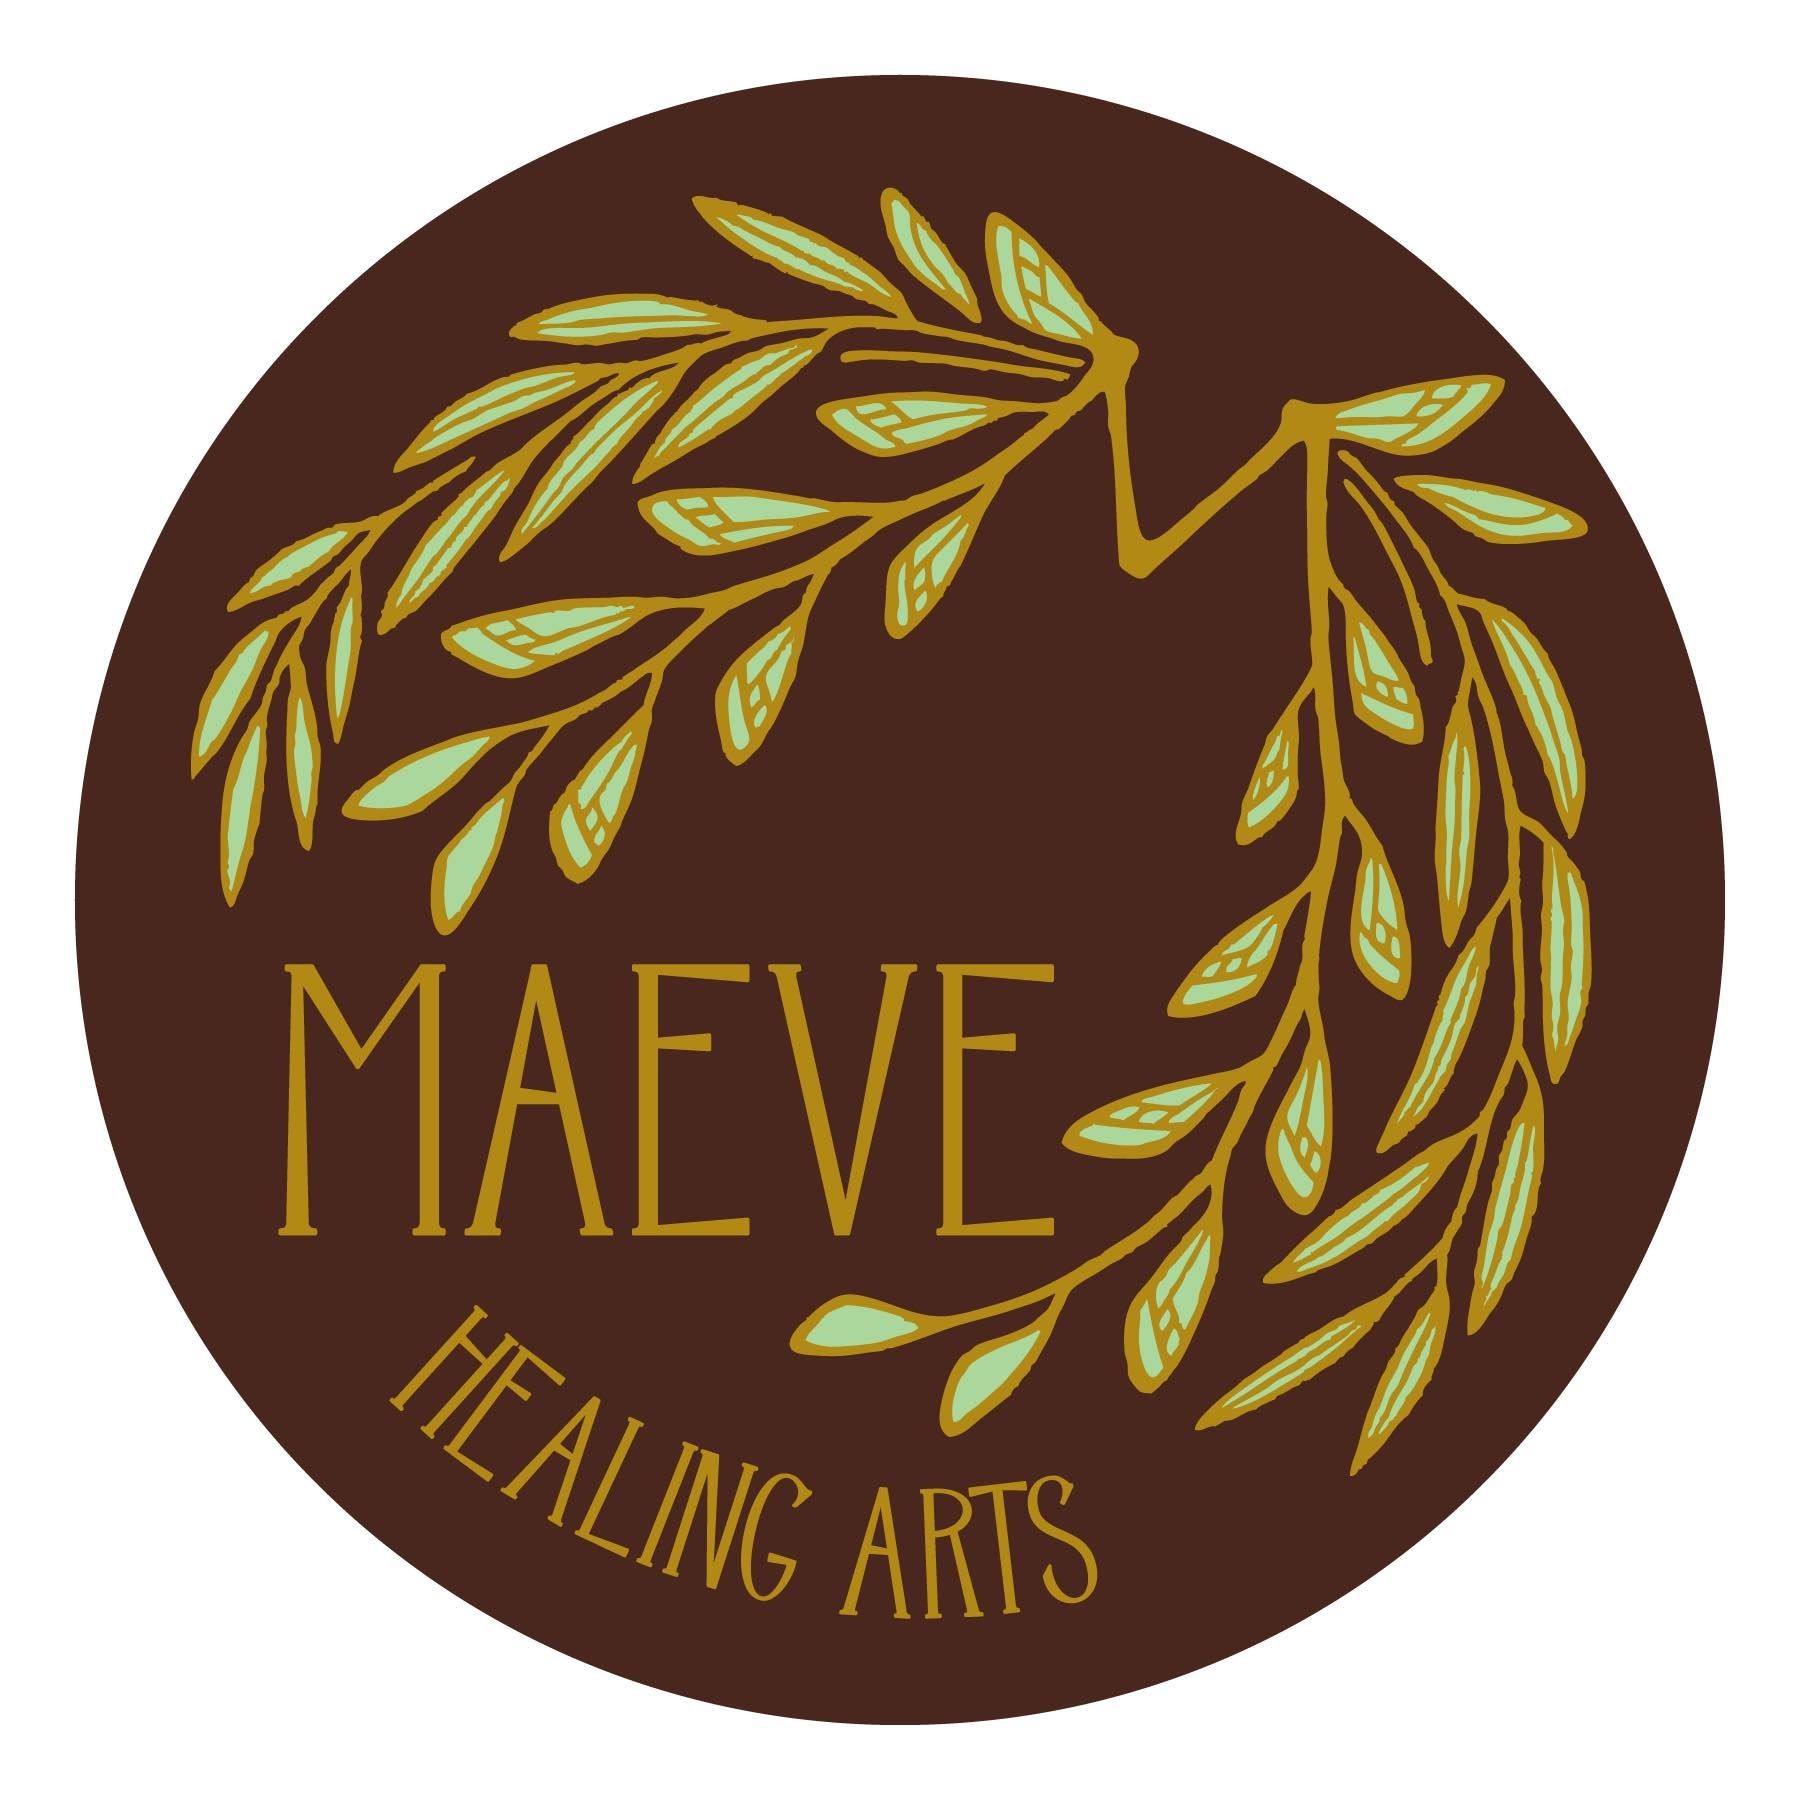 -Mavis Emma, of Maeve Healing Arts